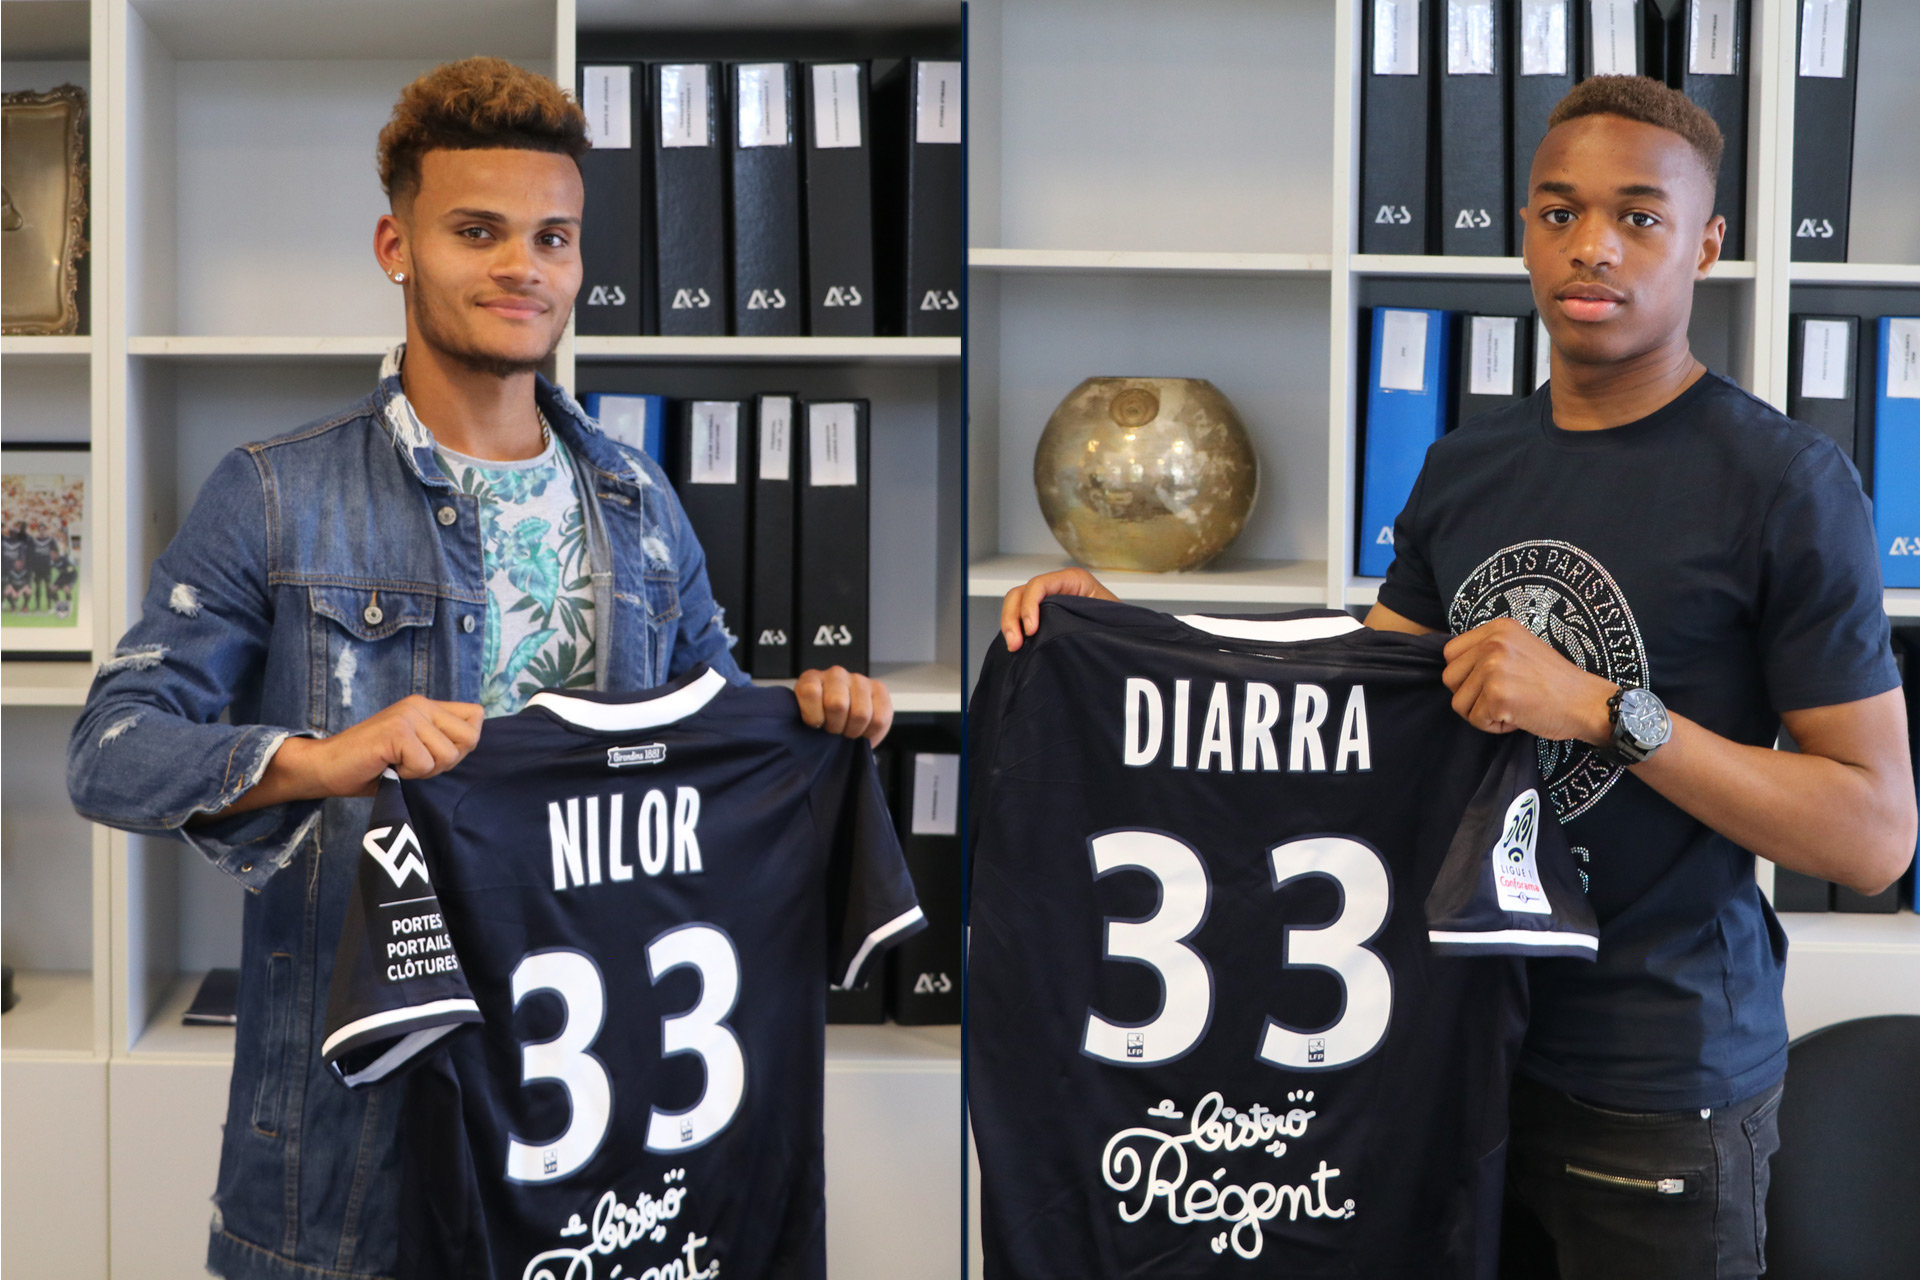 Cfa Girondins : Premier contrat professionnel pour Ibrahim Diarra et Michaël Nilor ! - Formation Girondins 